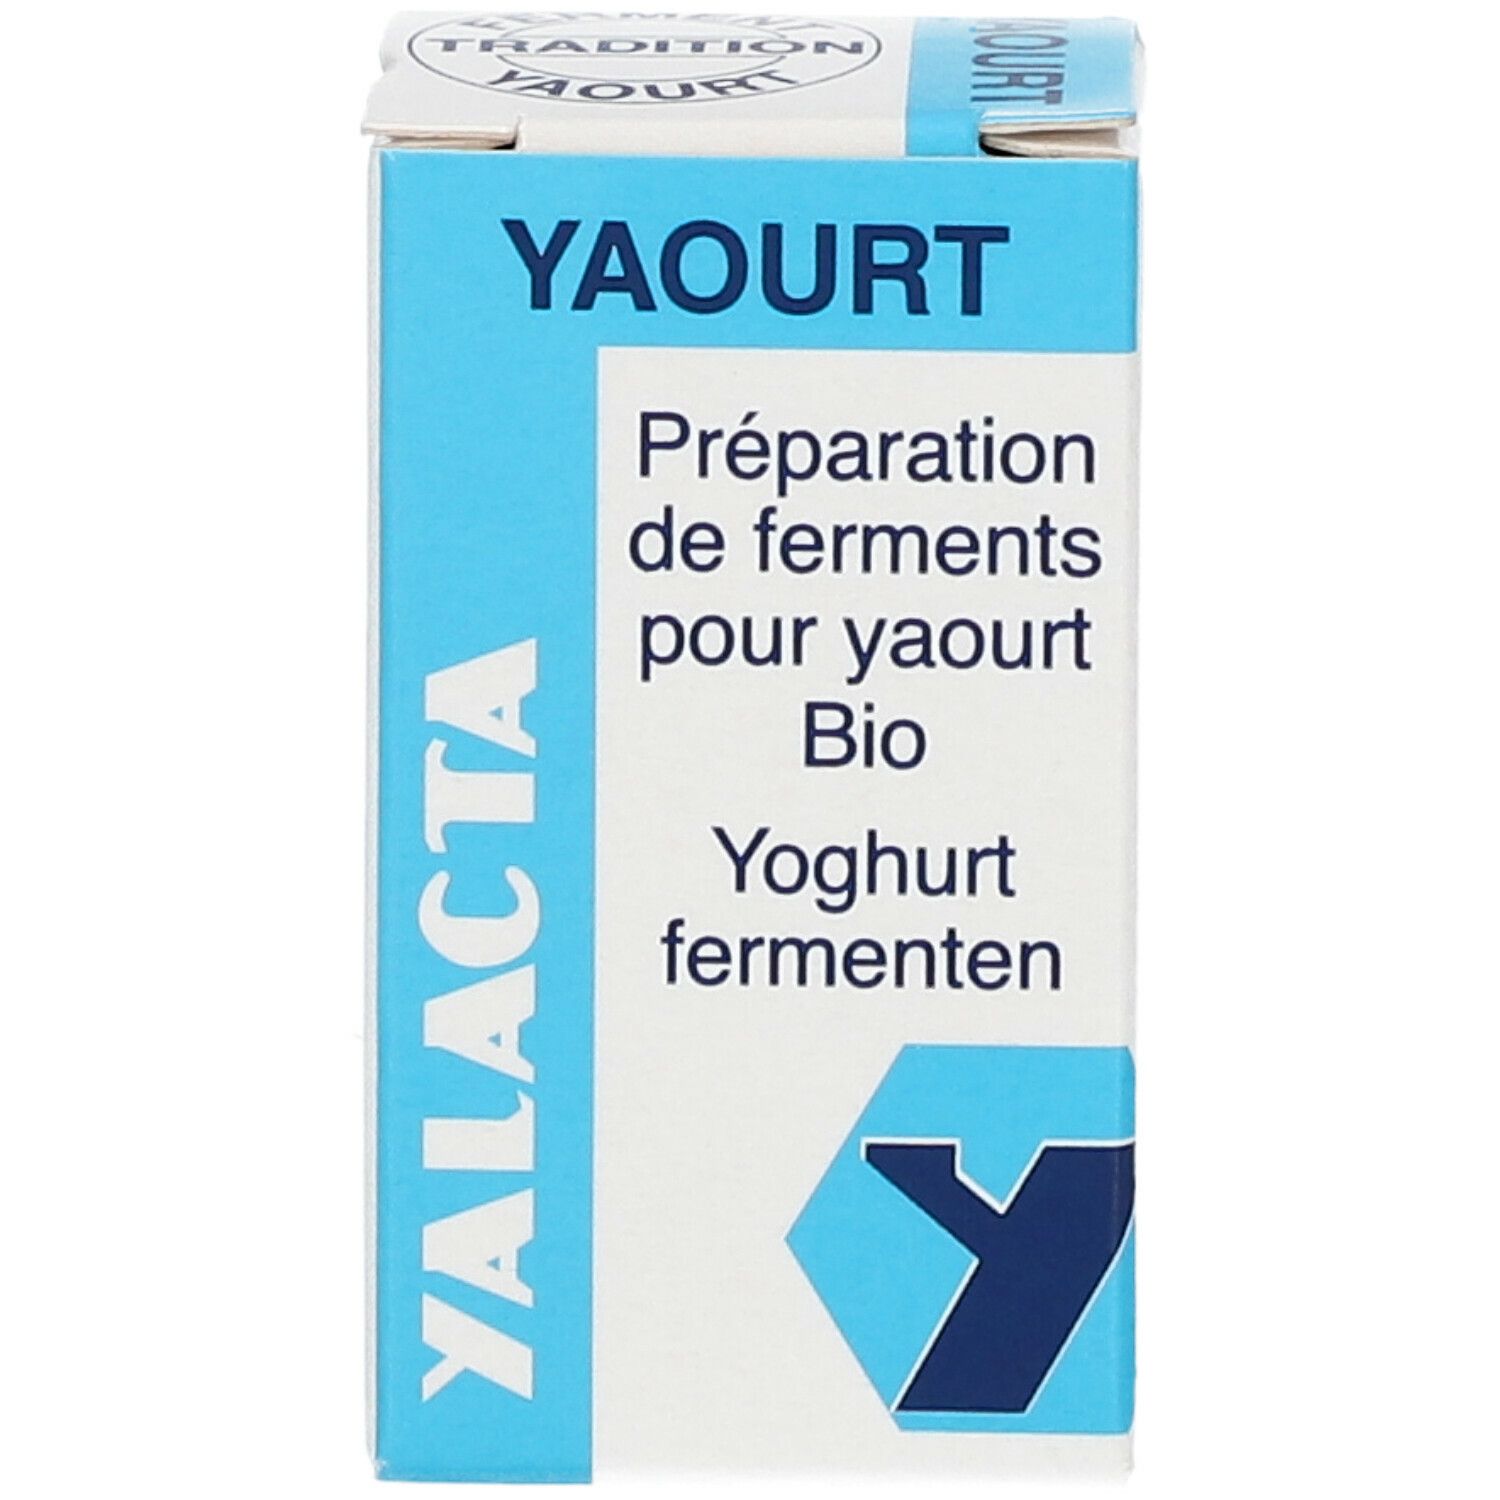 YALACTA FERMENT YAOURT 1 DOSE - Pharmacie en ligne